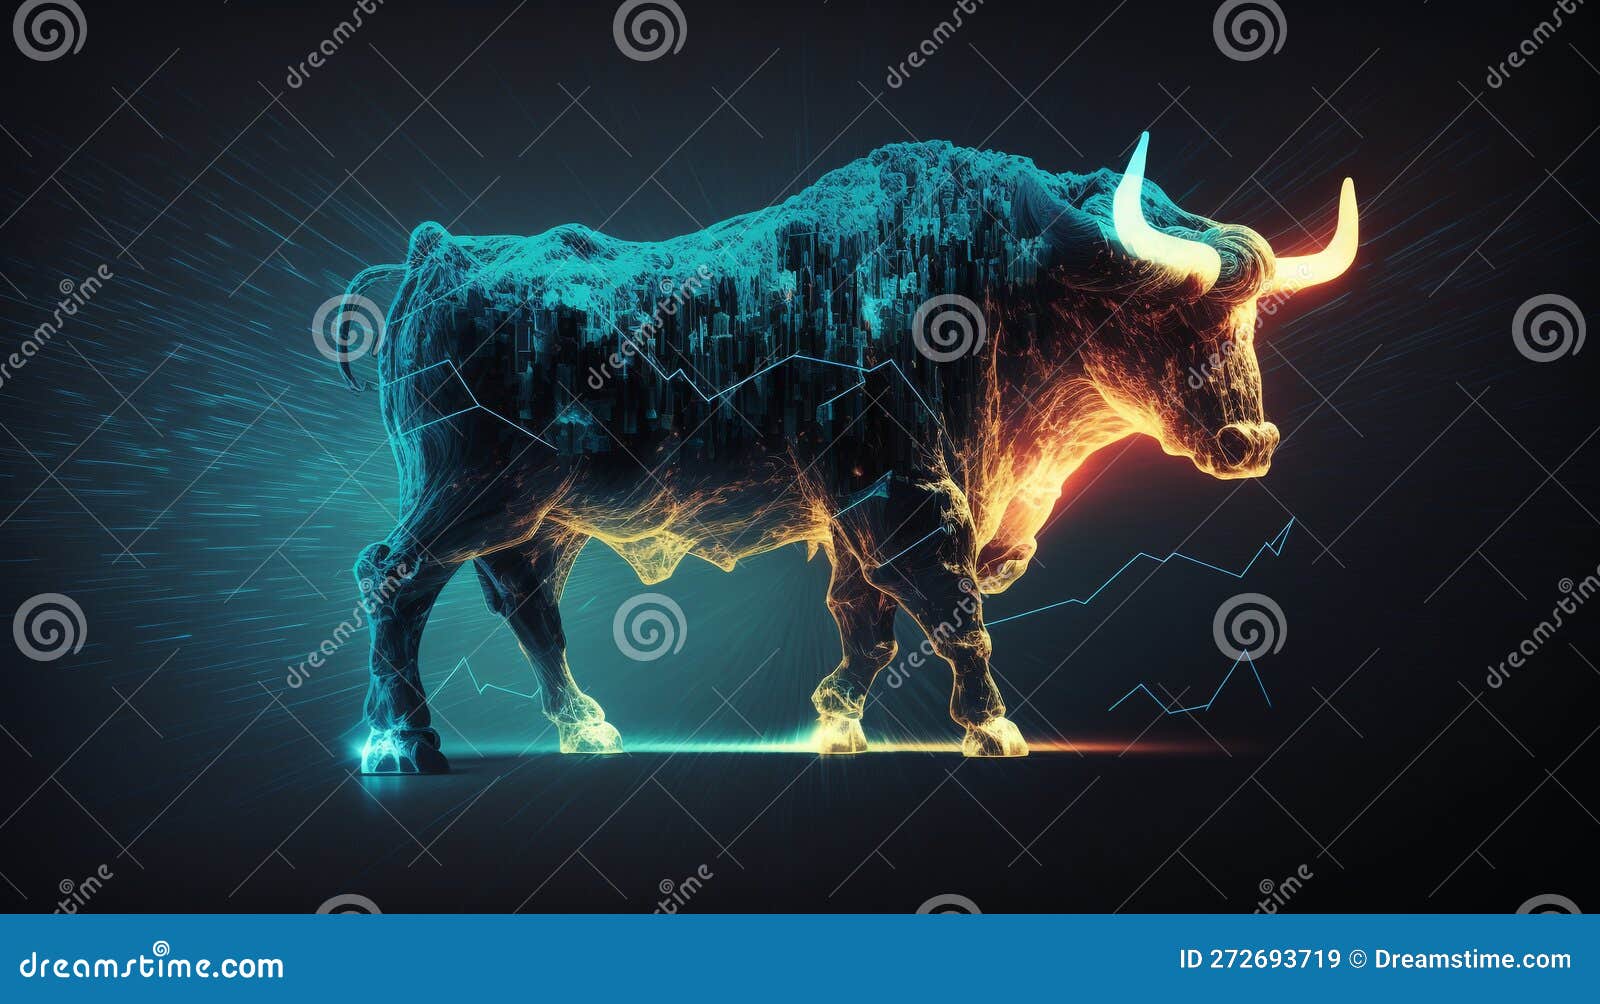 Raging stock market bull stock illustration. Illustration of casting ...